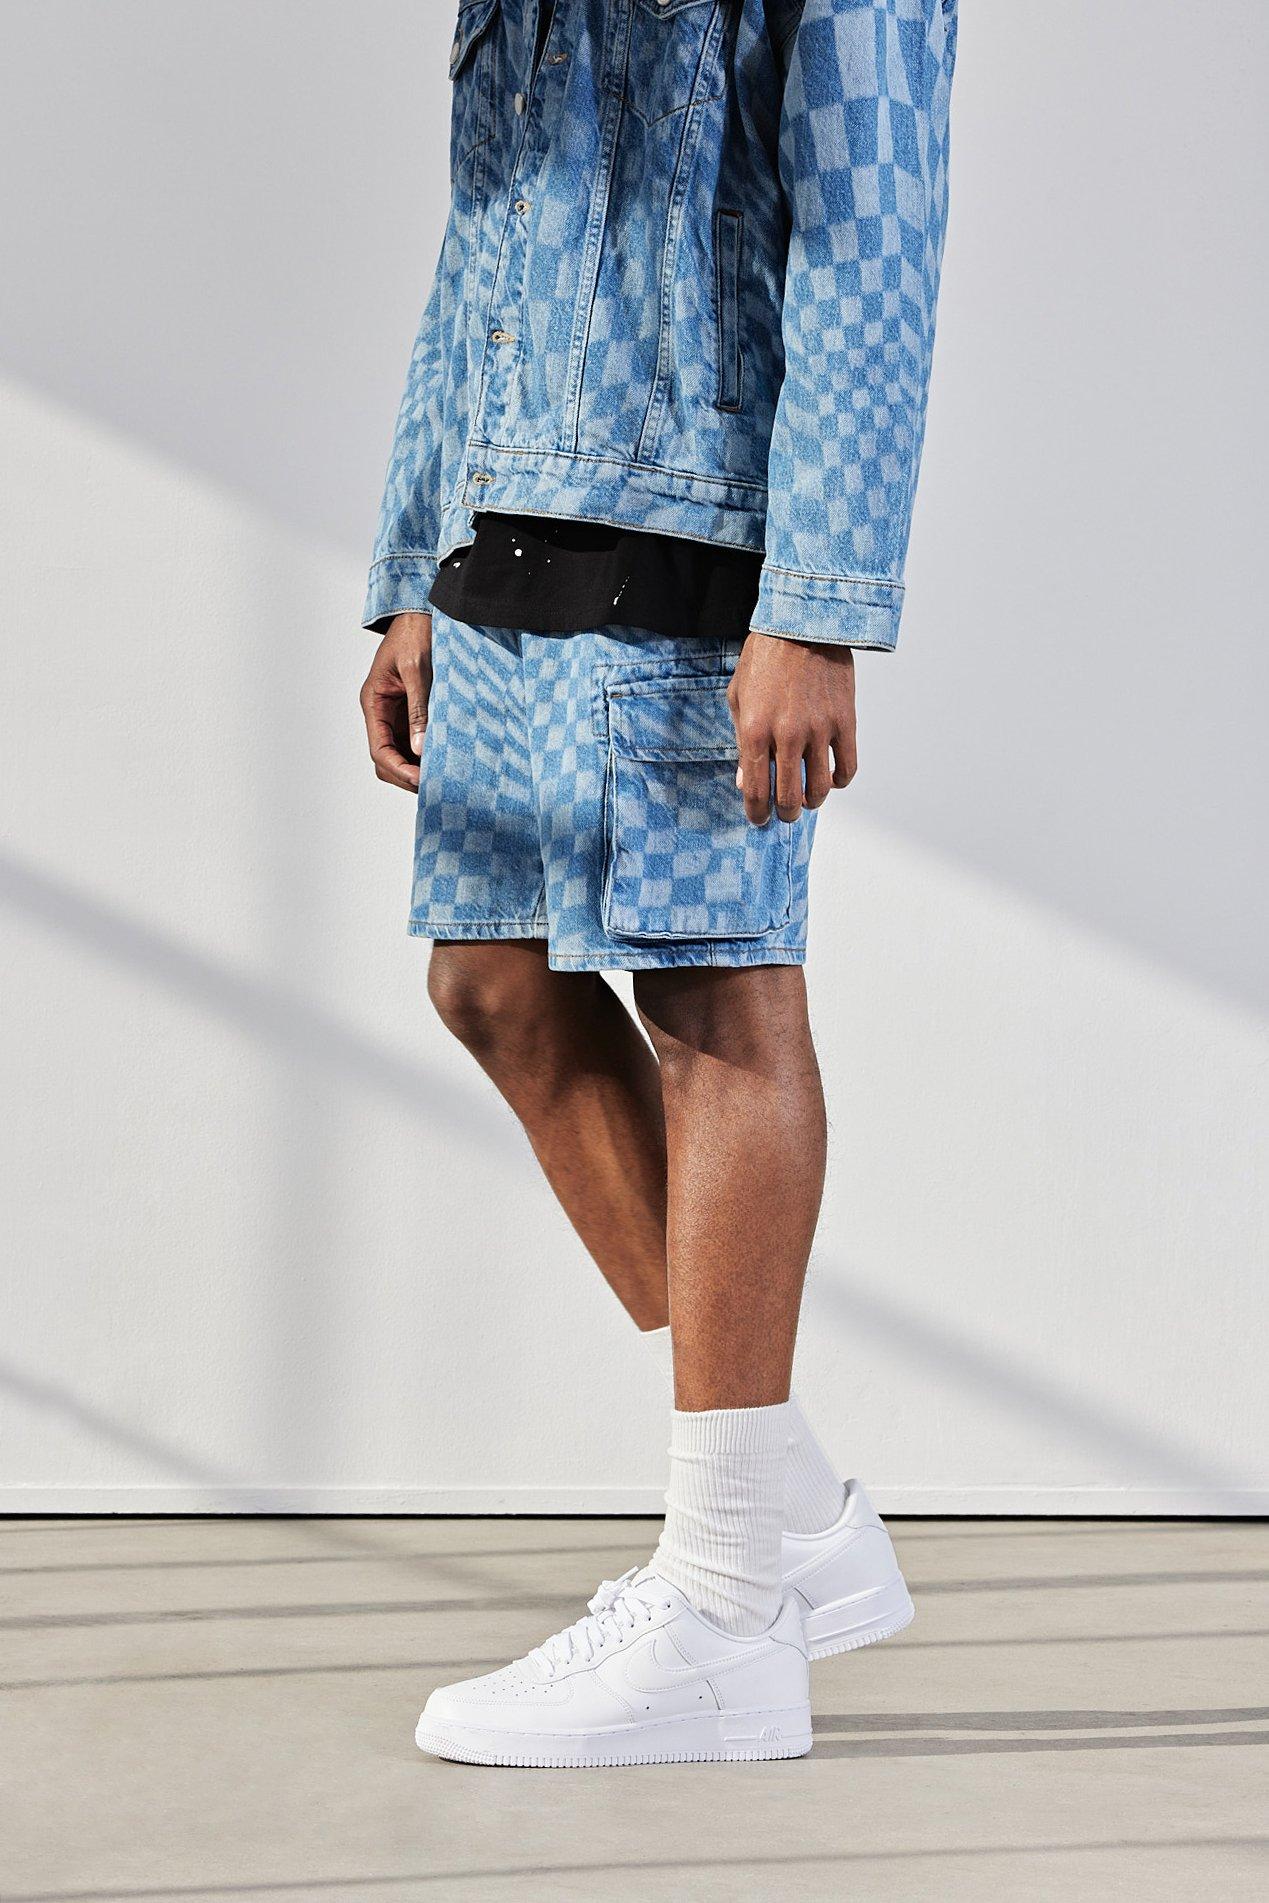 Louis Vuitton Monogram Camo Blue Shorts